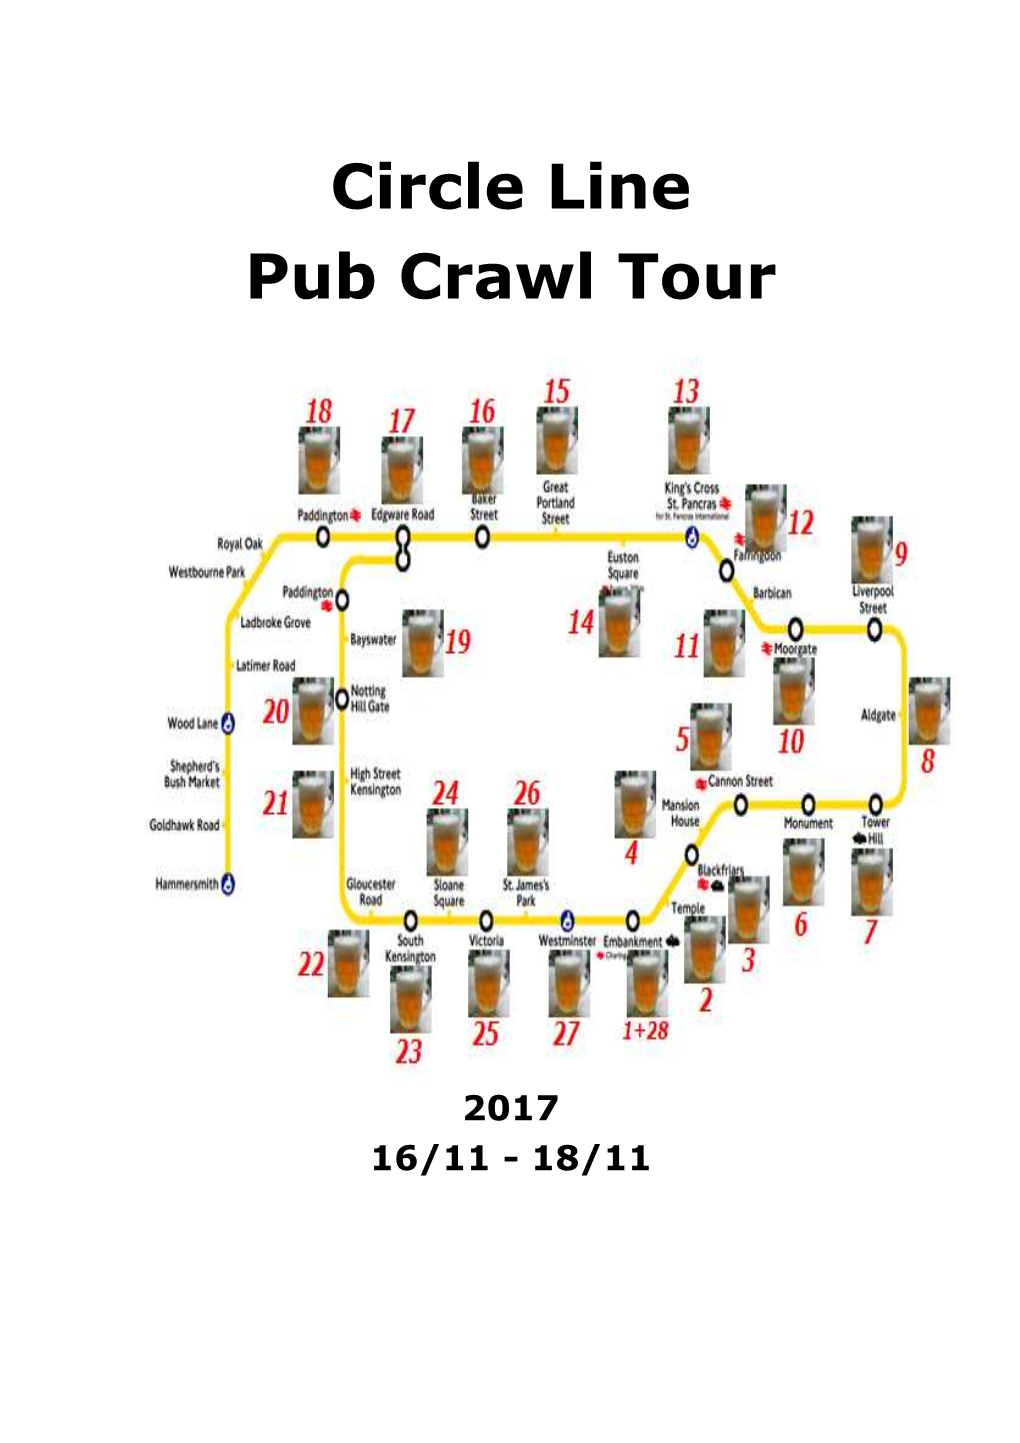 2017-Circle Line Pub Crawl Guide